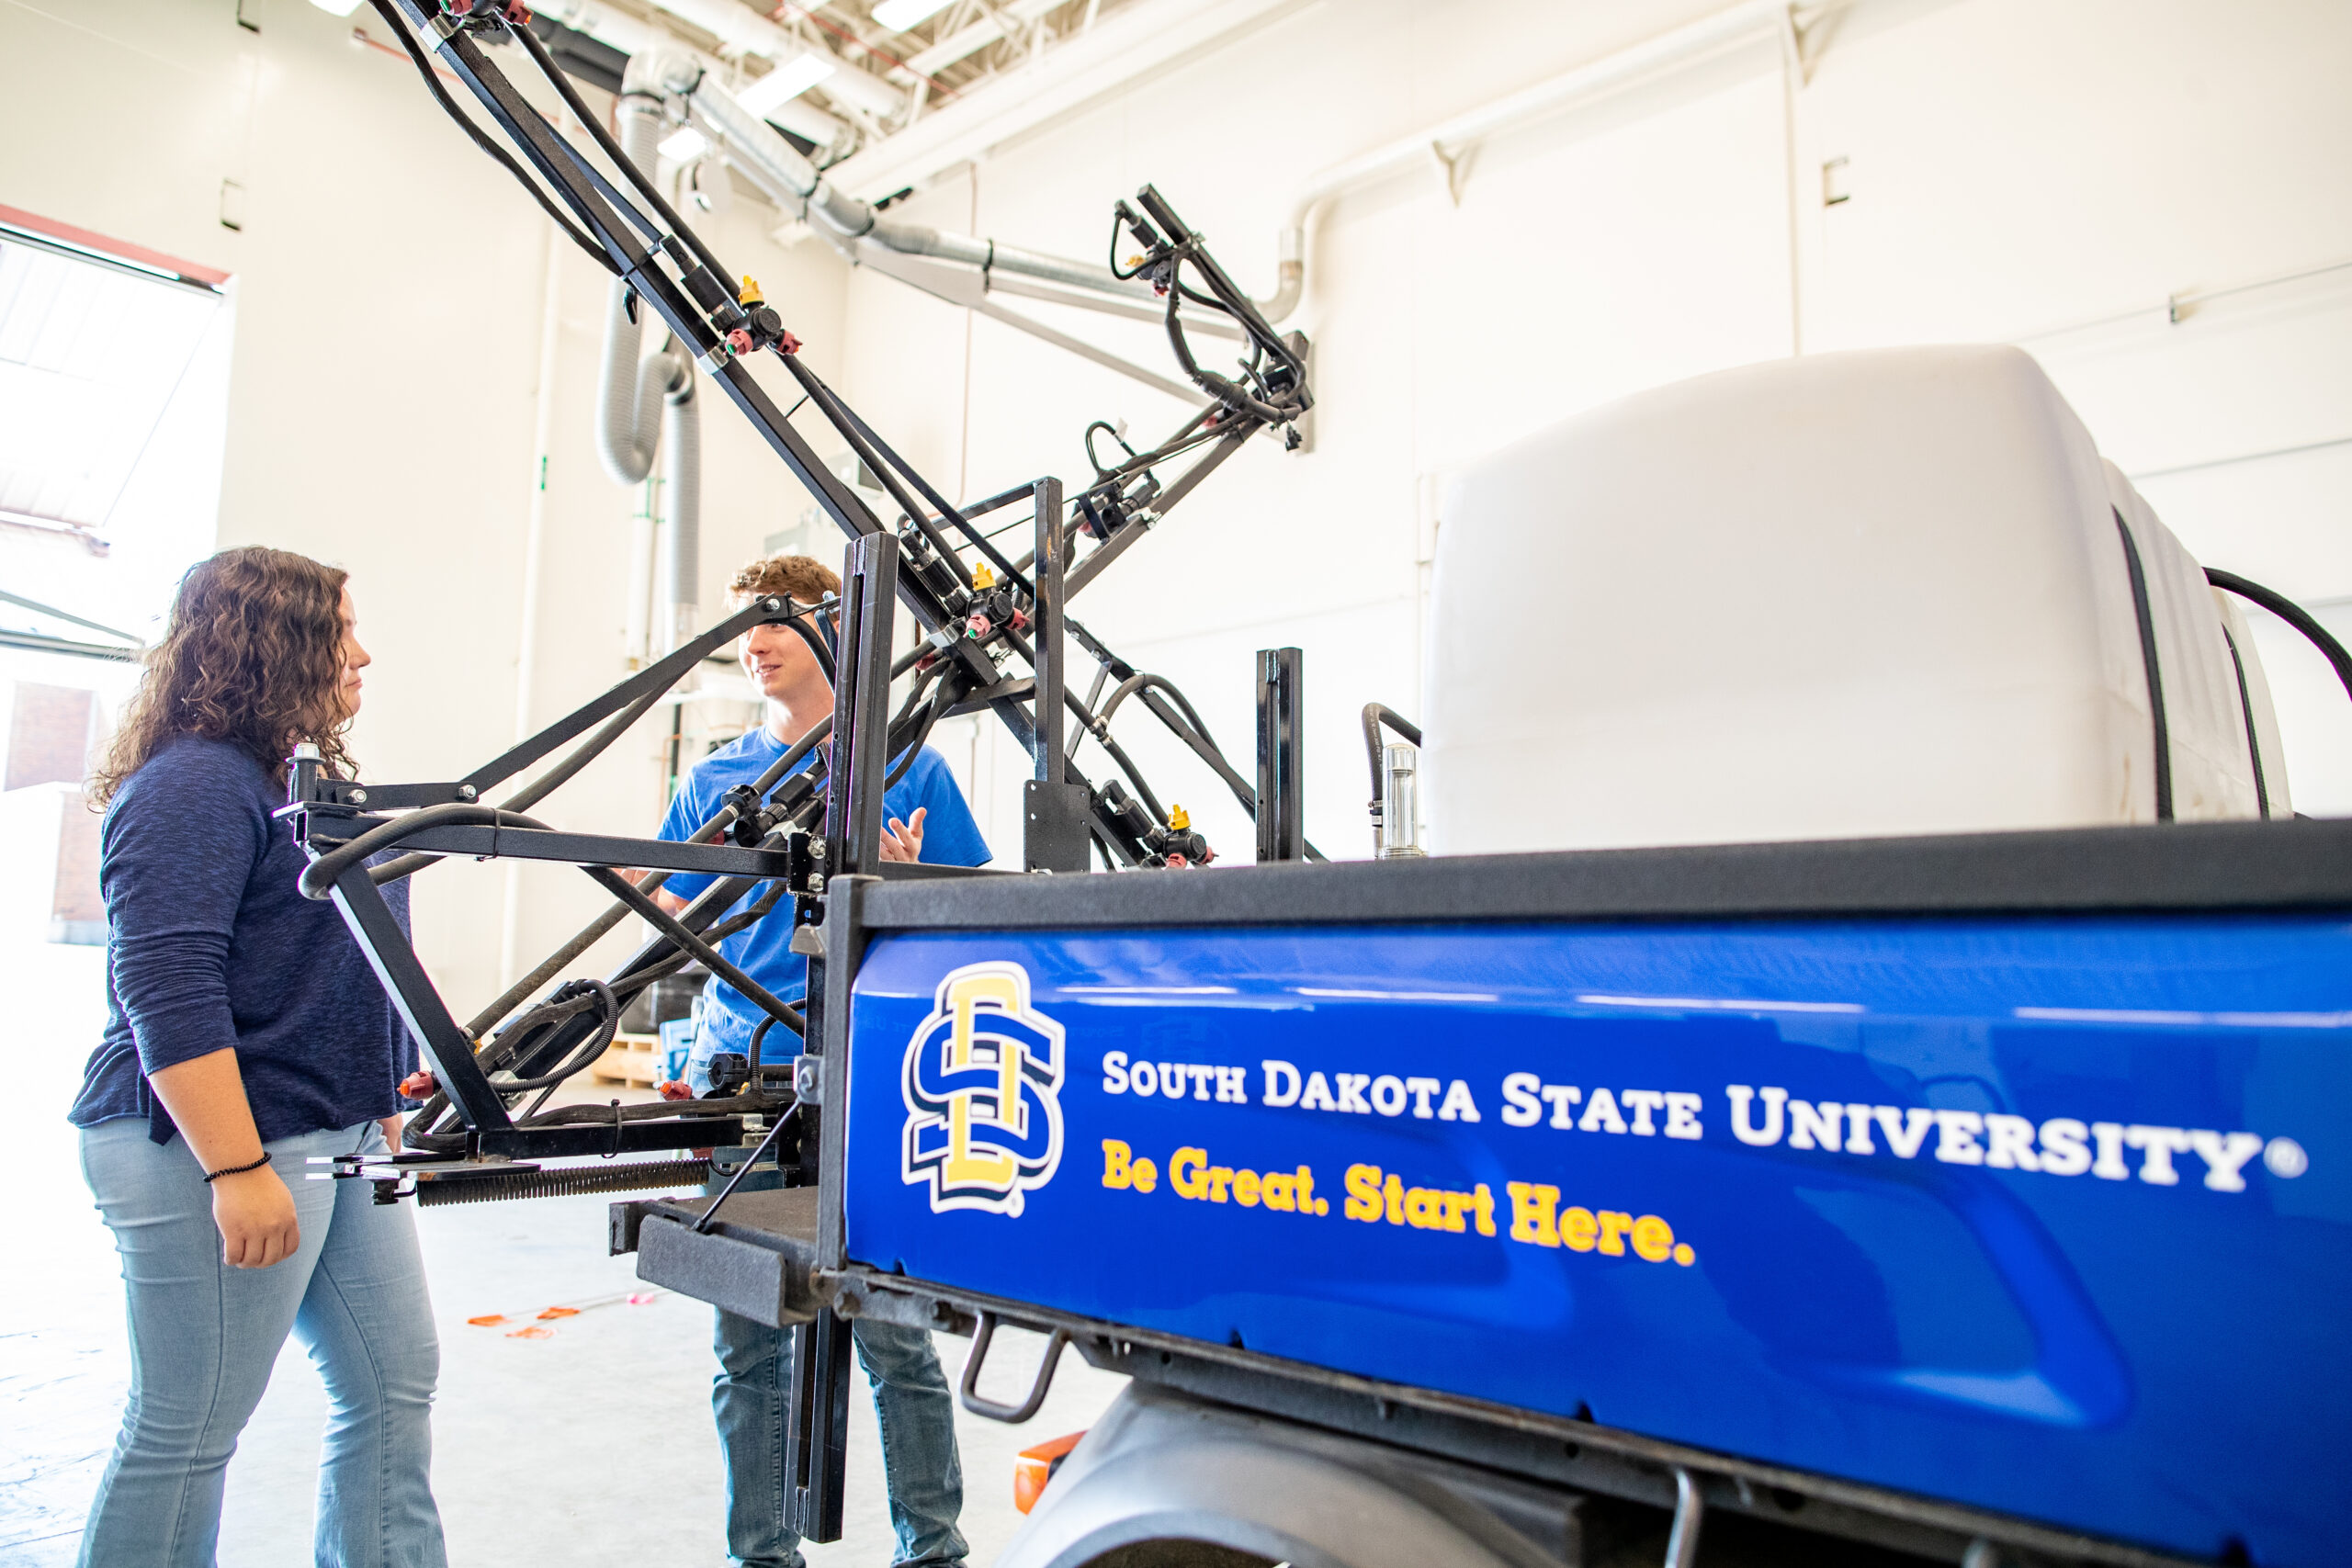 South Dakota State University branded Agriculture equipment